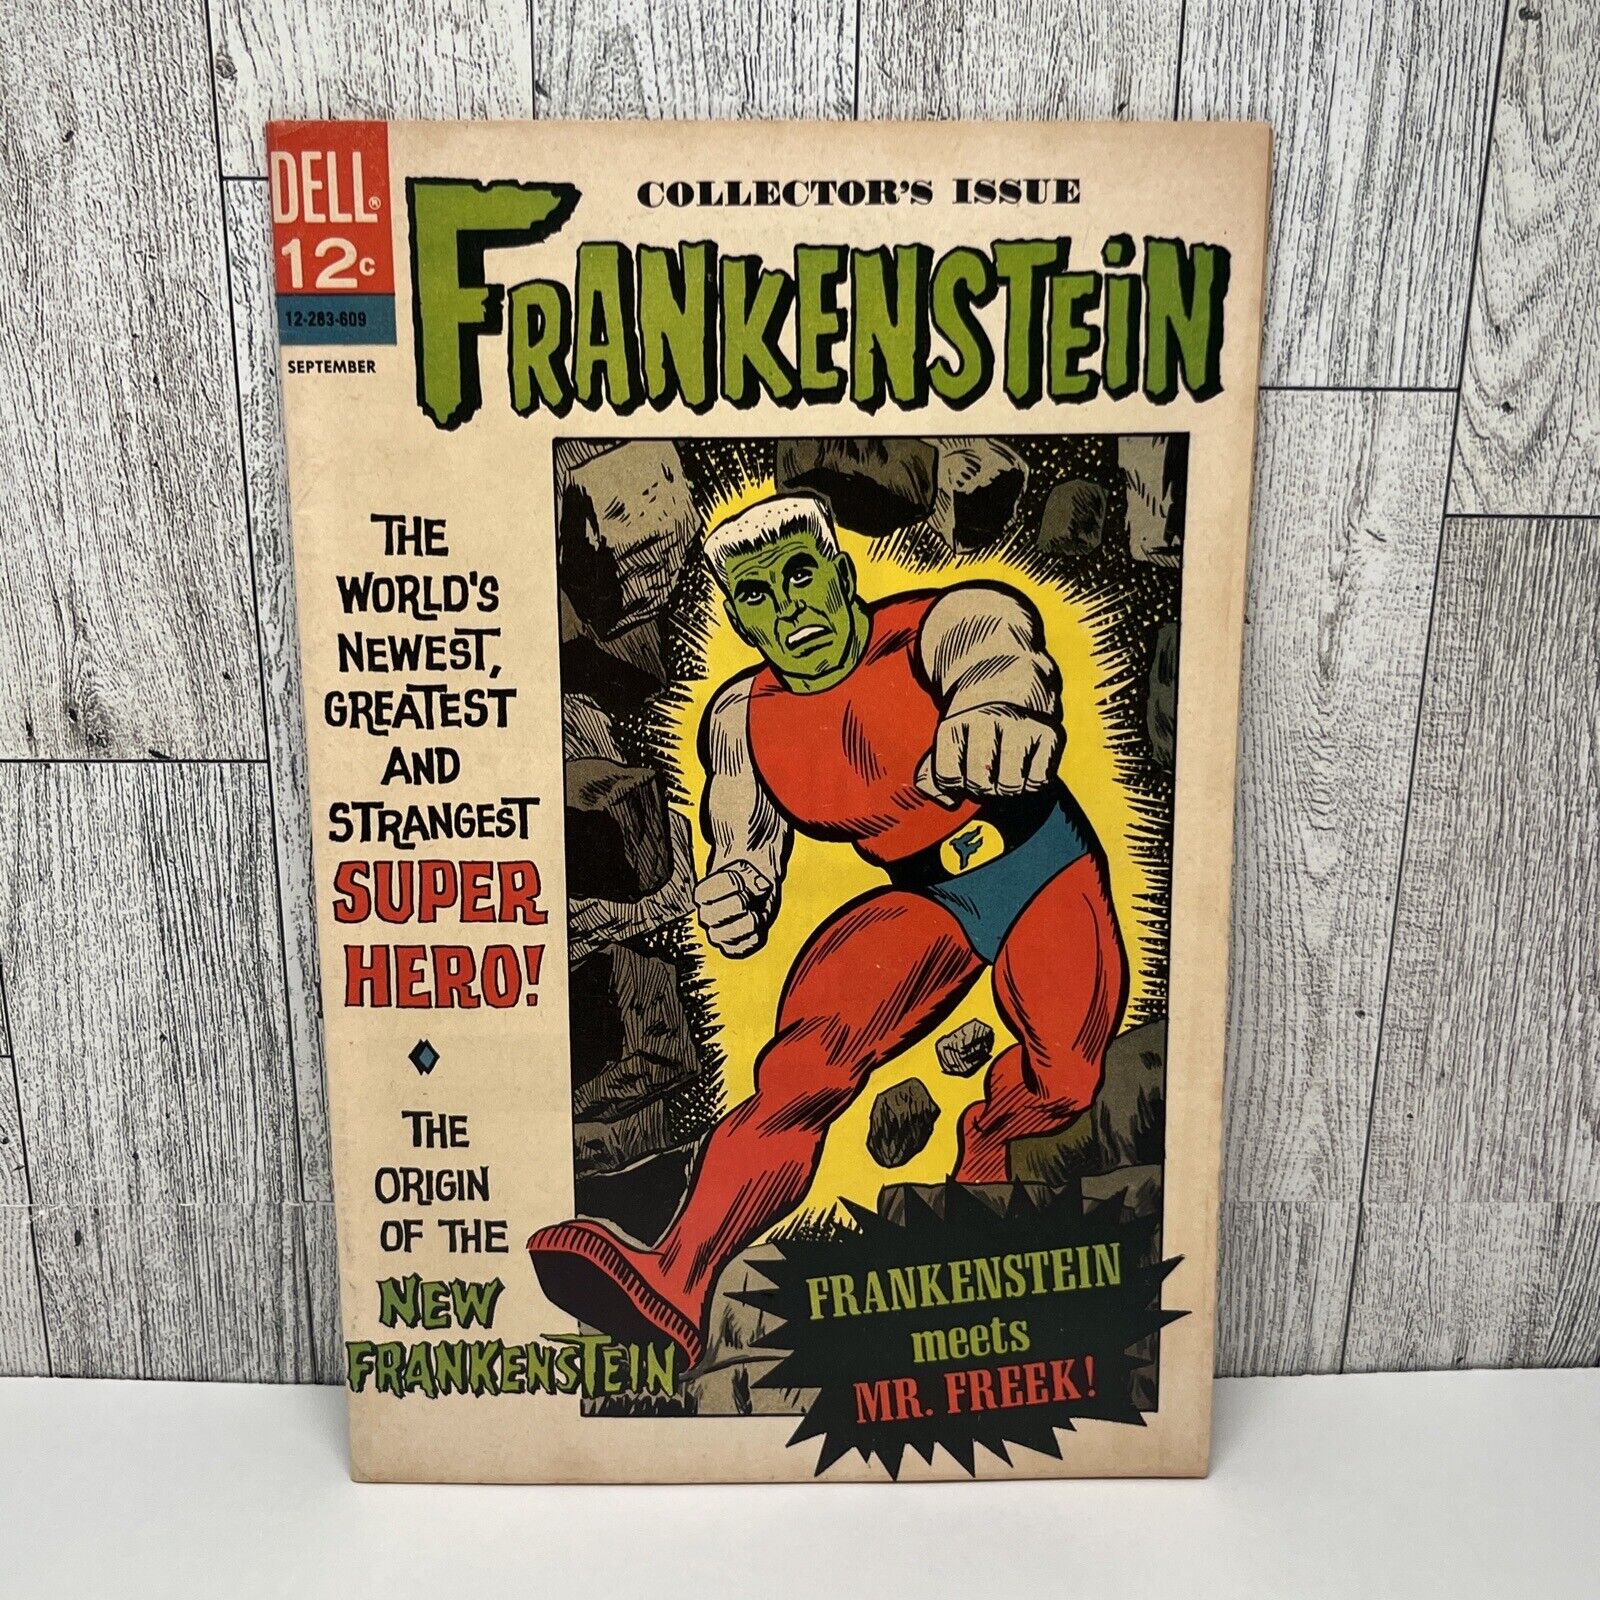 Frankenstein #2 Dell 12 Cent September Collector’s Issue